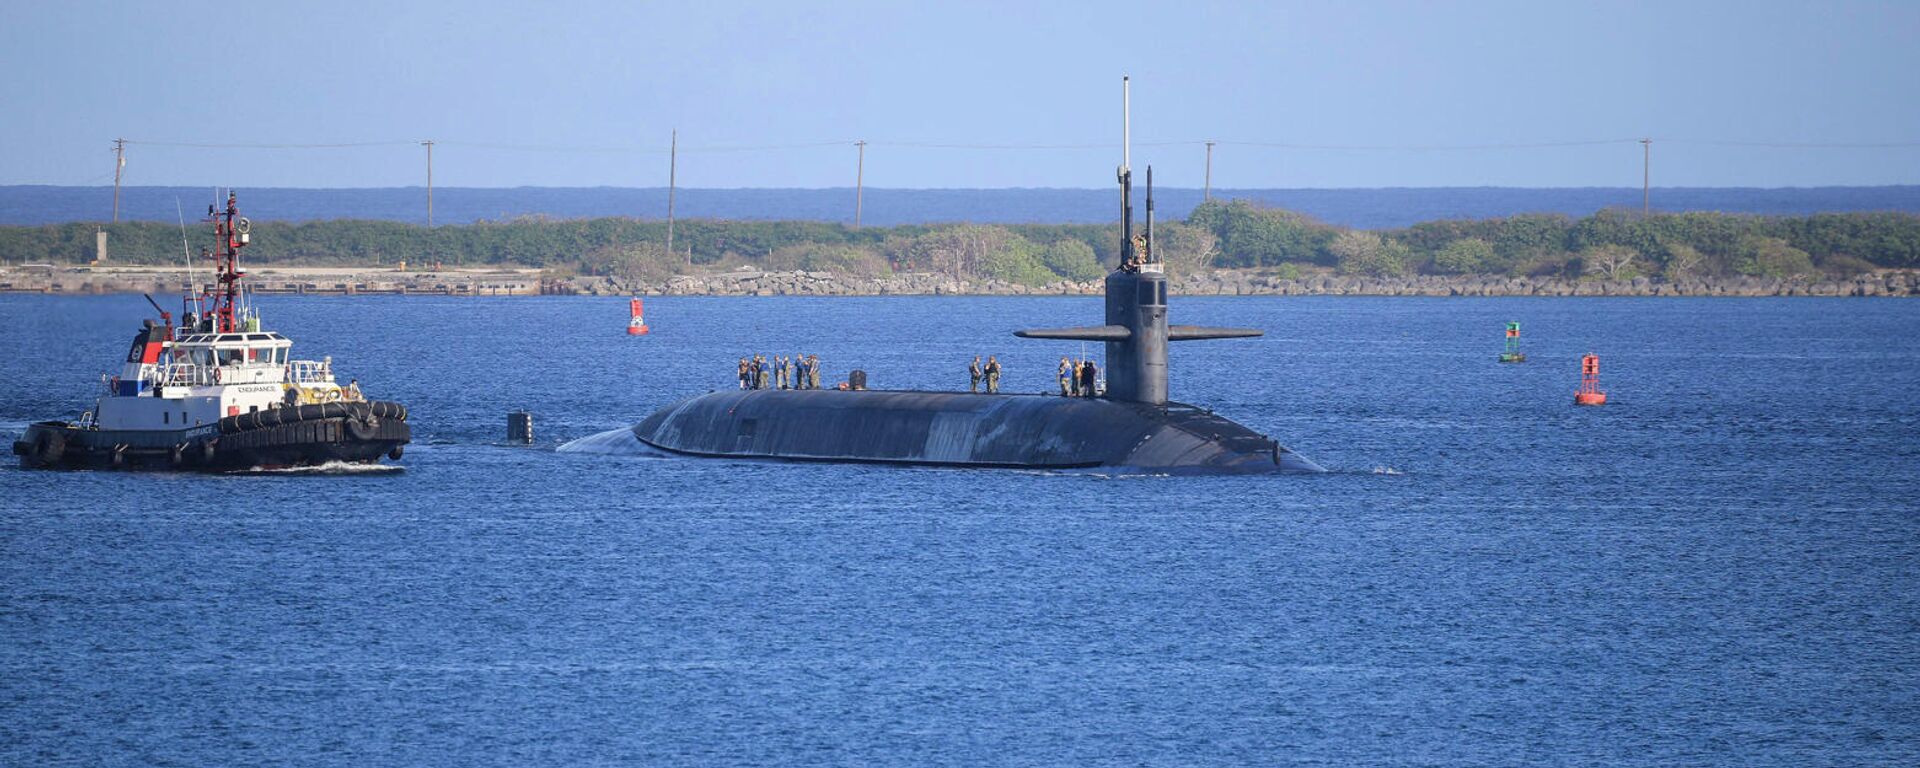 USS Nevada missile sub in Guam port visit, January 2022. - Sputnik International, 1920, 17.01.2022